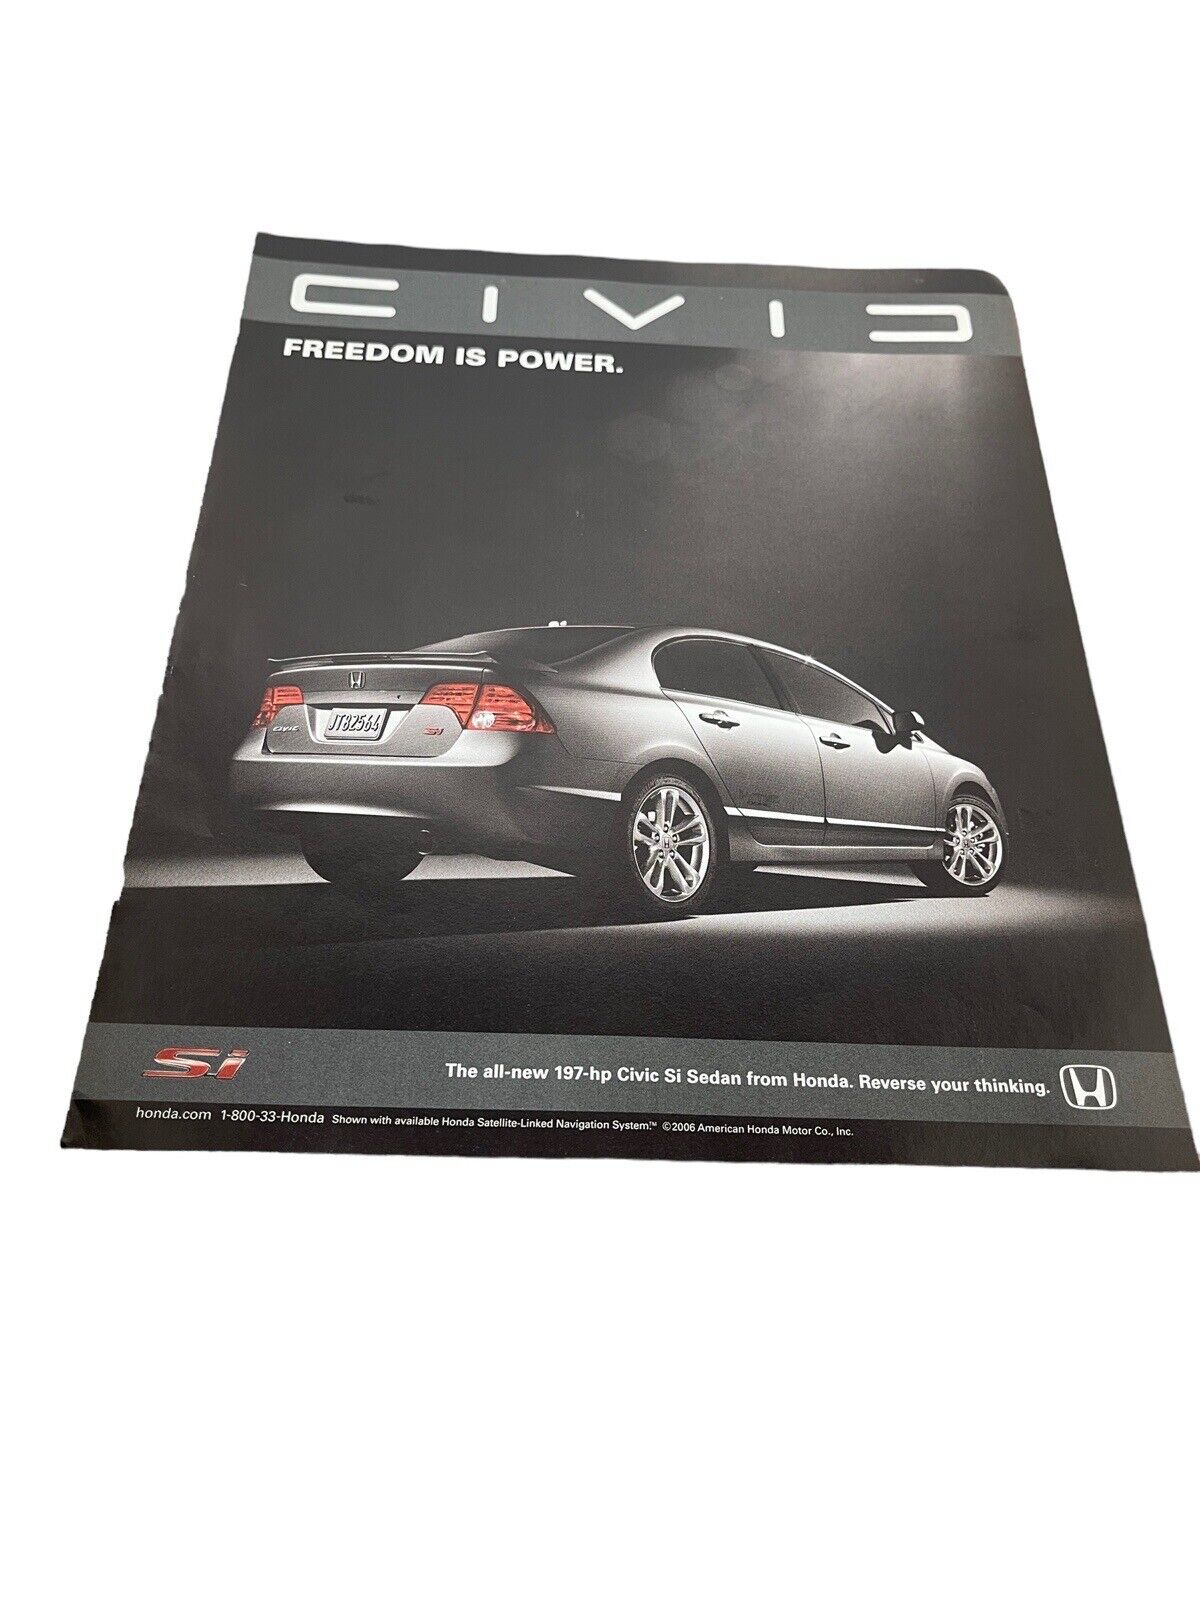 2006 Honda Civic SI Sedan “Freedom is Power” Print Ad  - Great To Frame